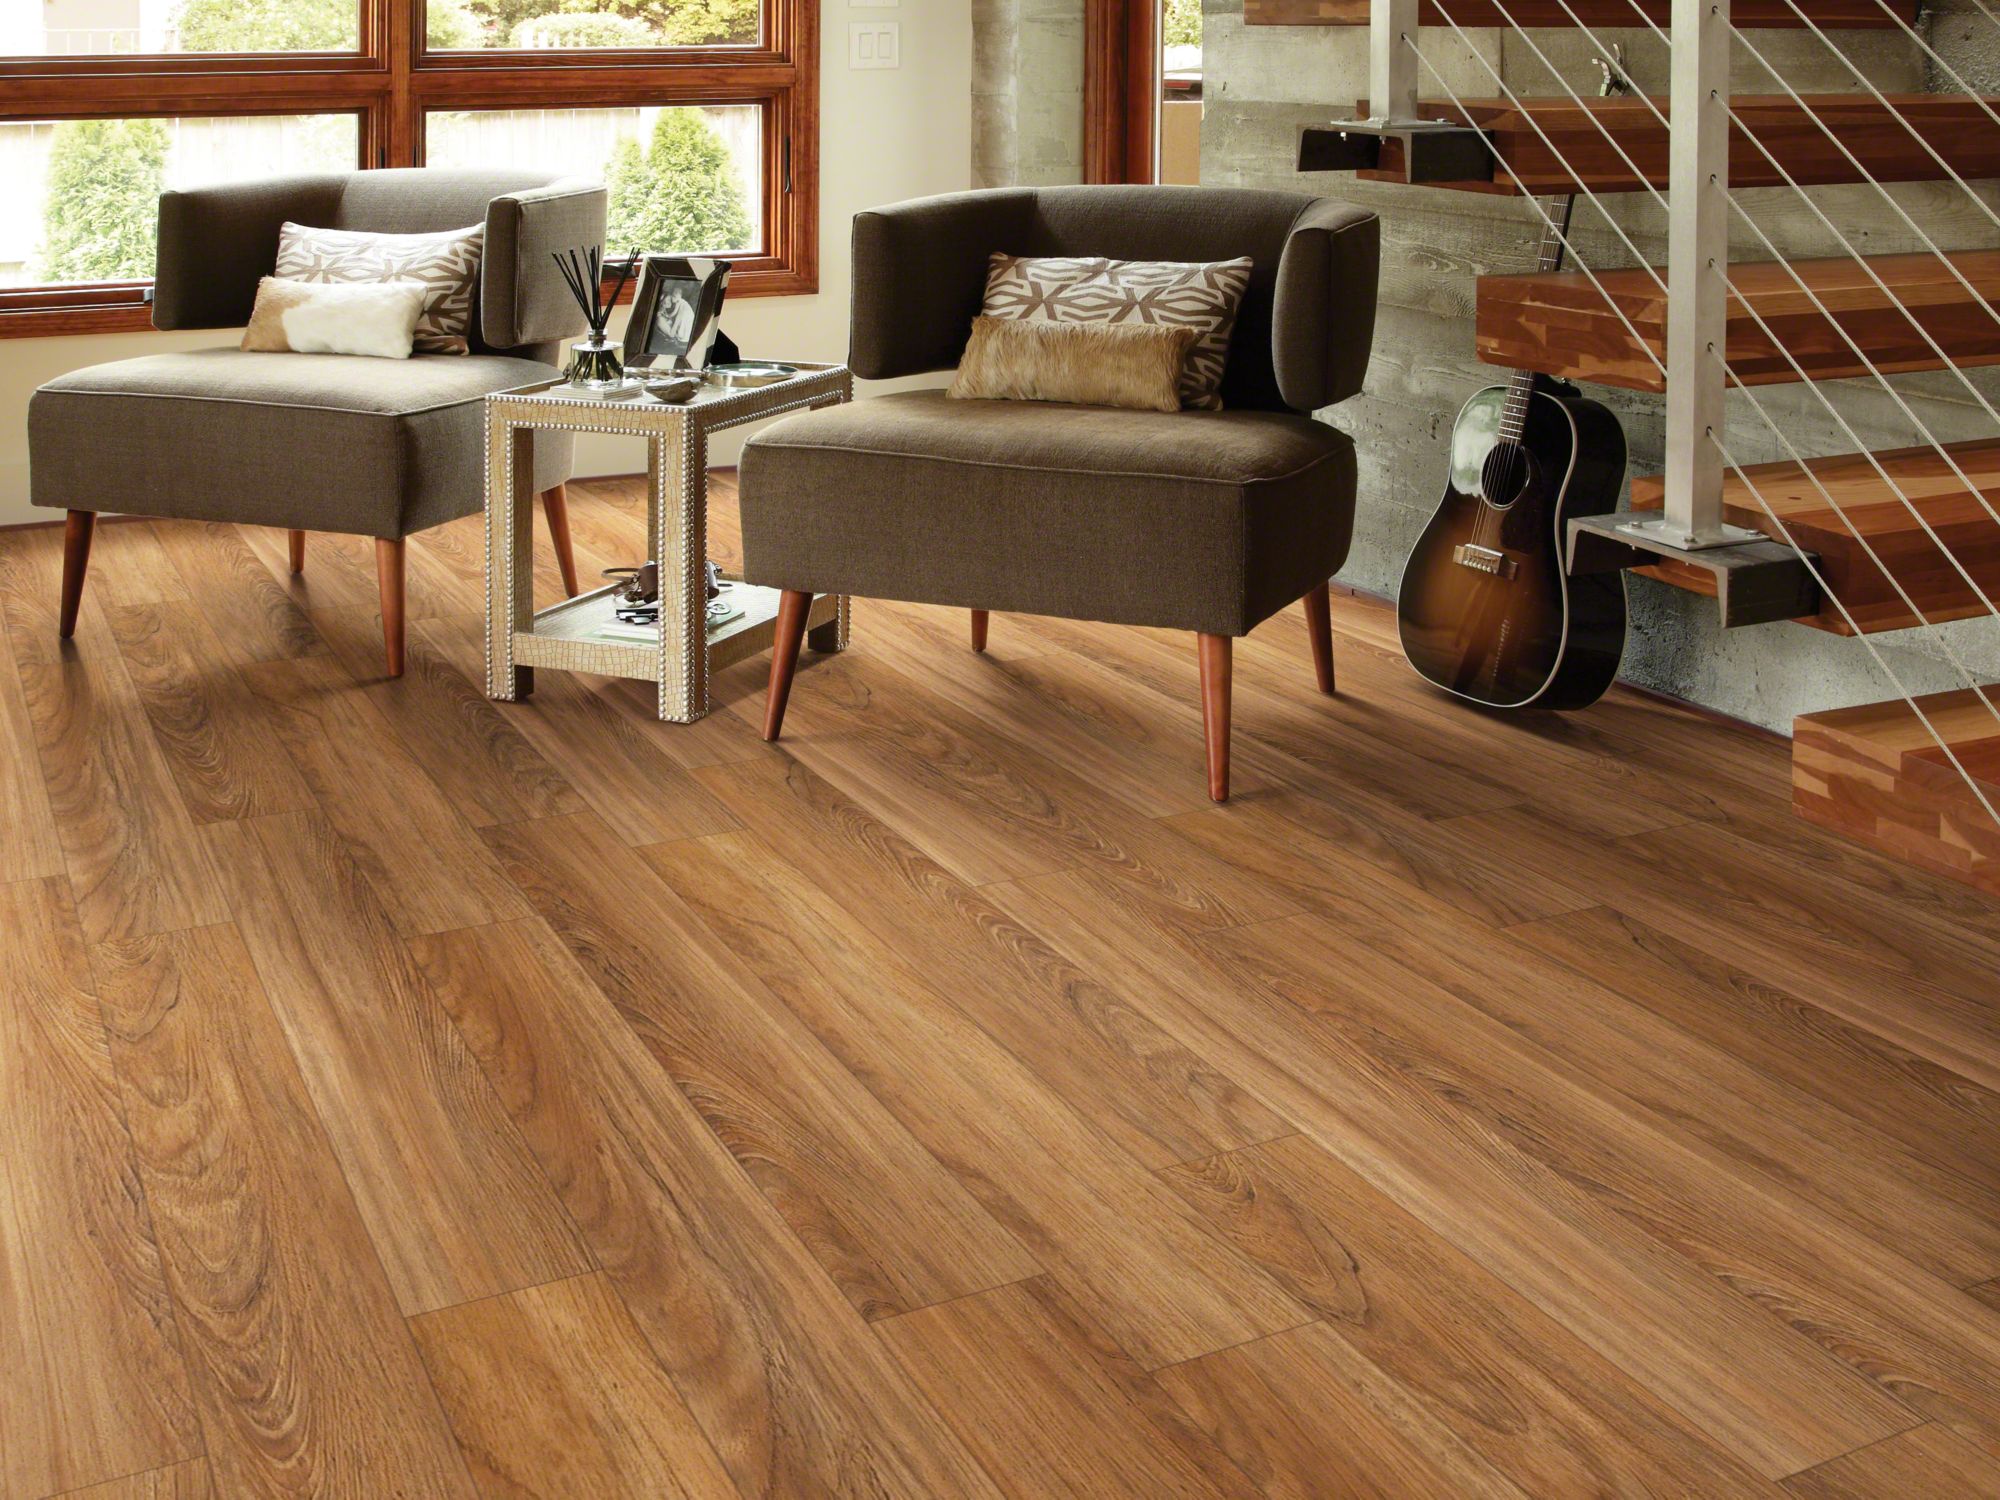 Is teak flooring worth the investment?